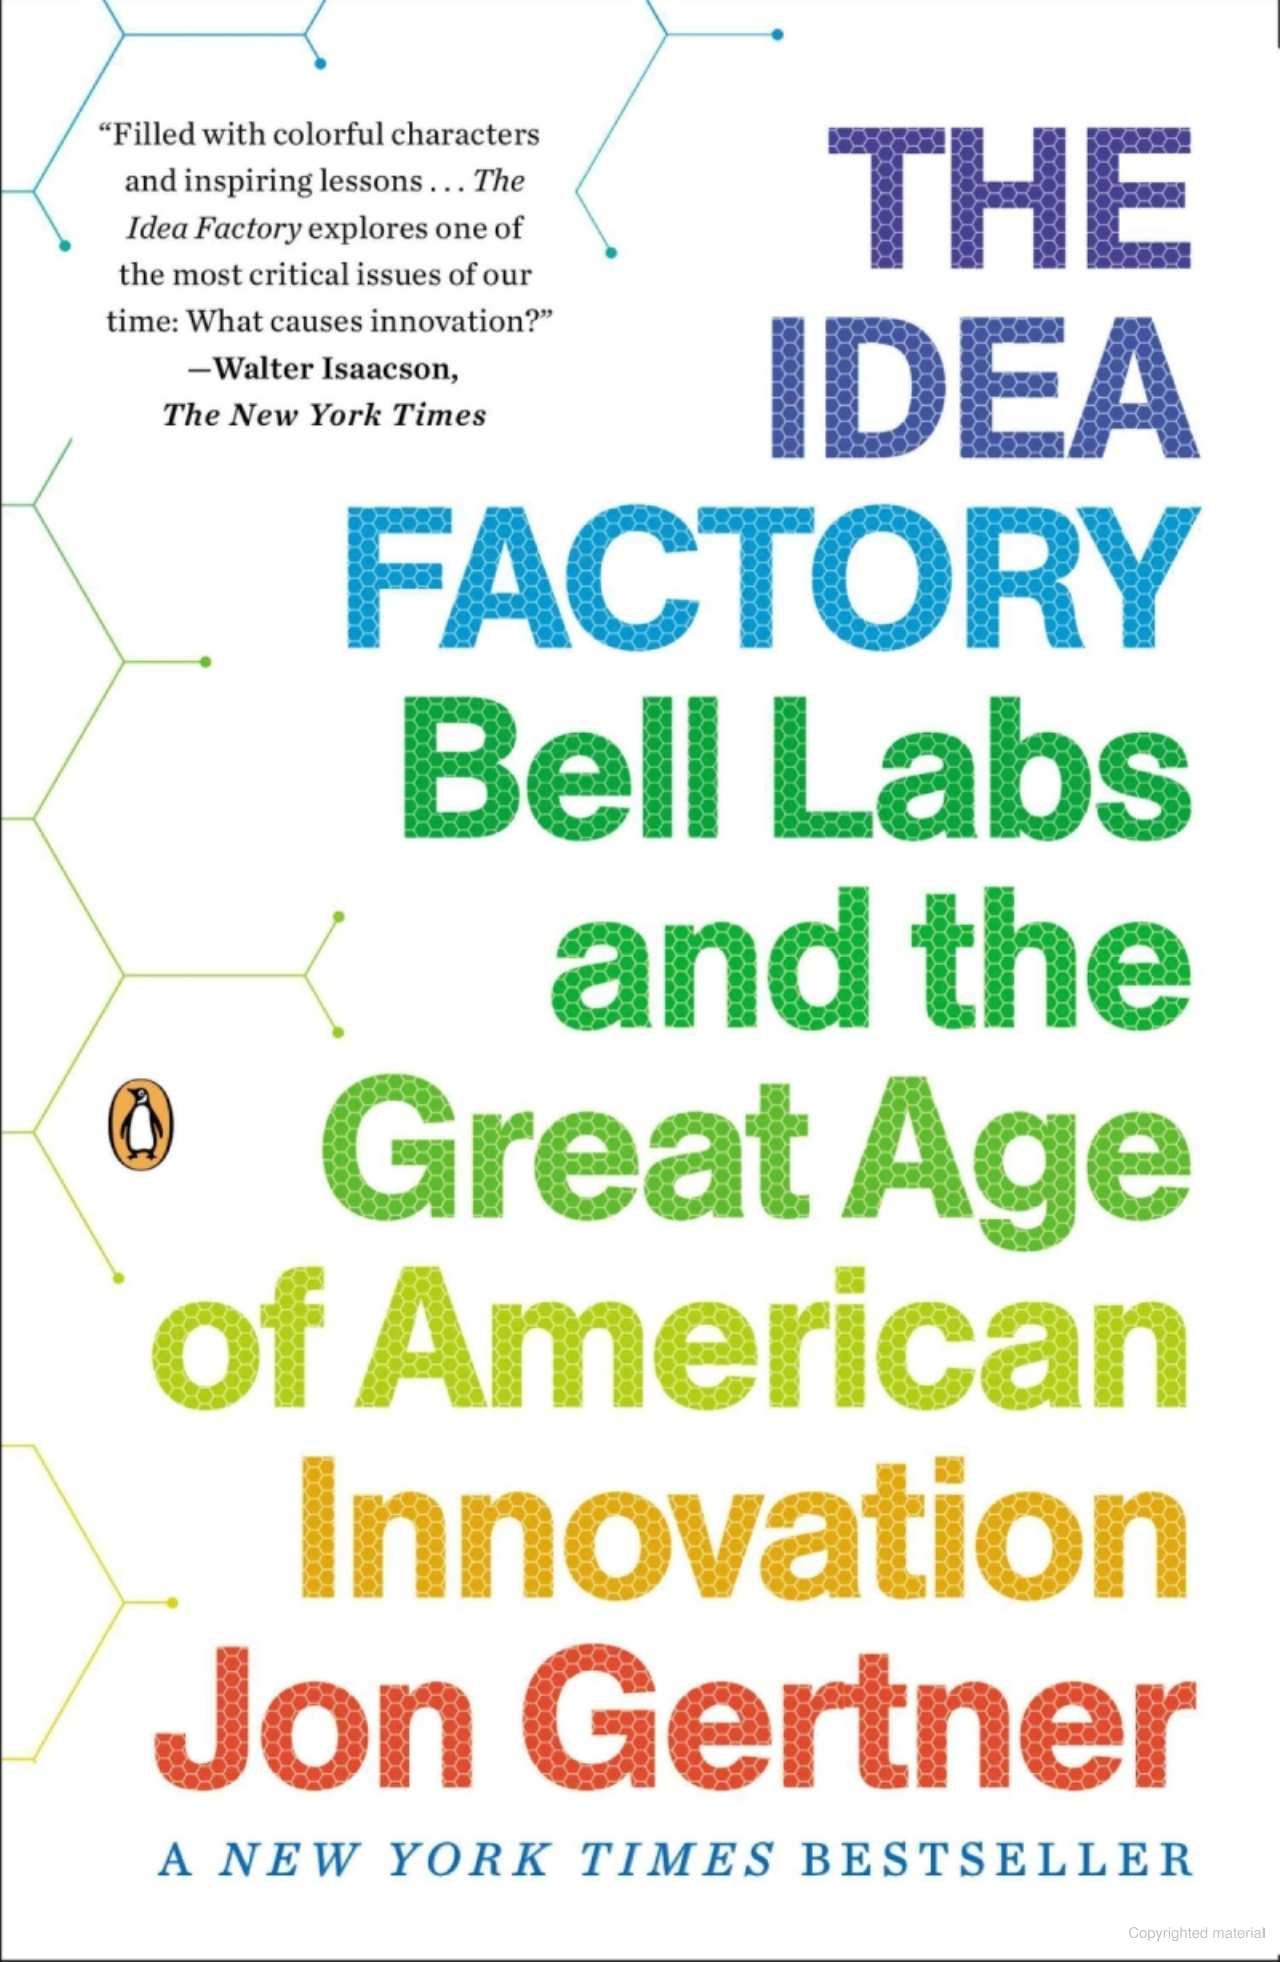 Jon Gernter: The idea factory (2012, Penguin Press)